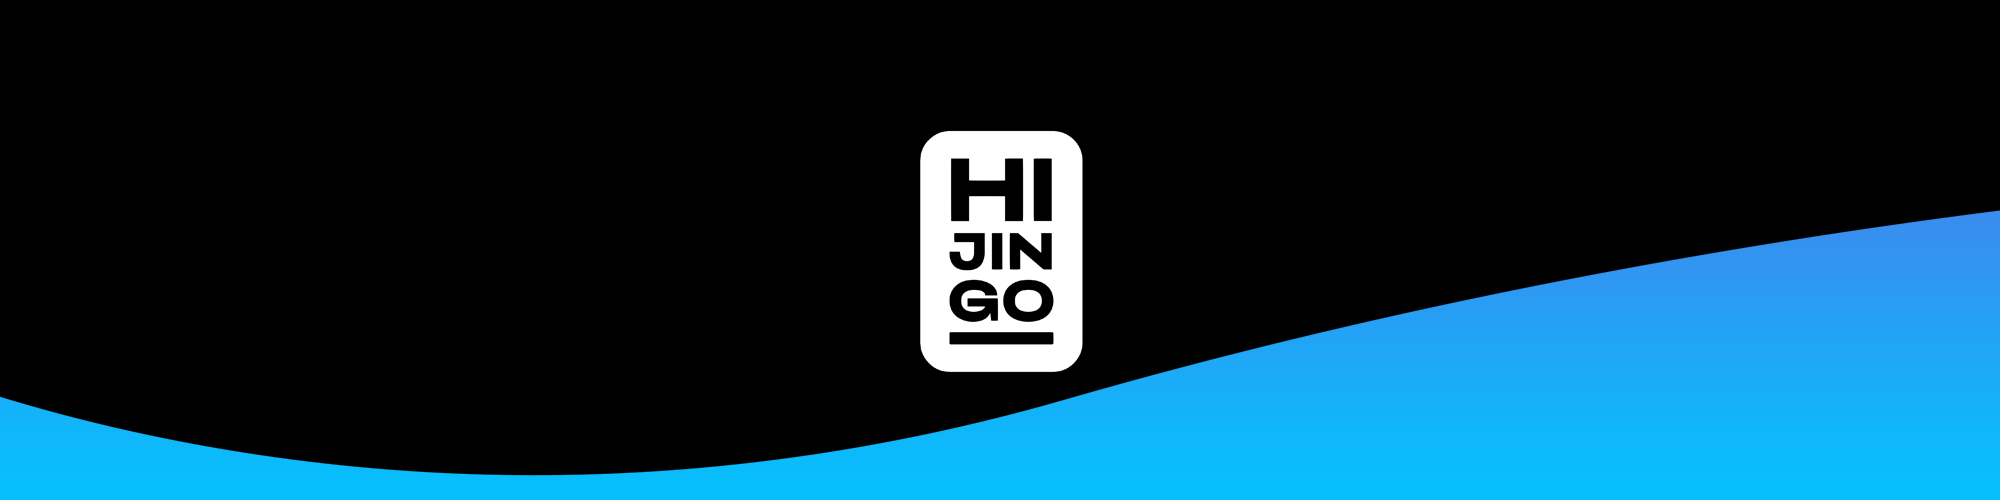 Hijingo Bingo Alternative on EazeGames